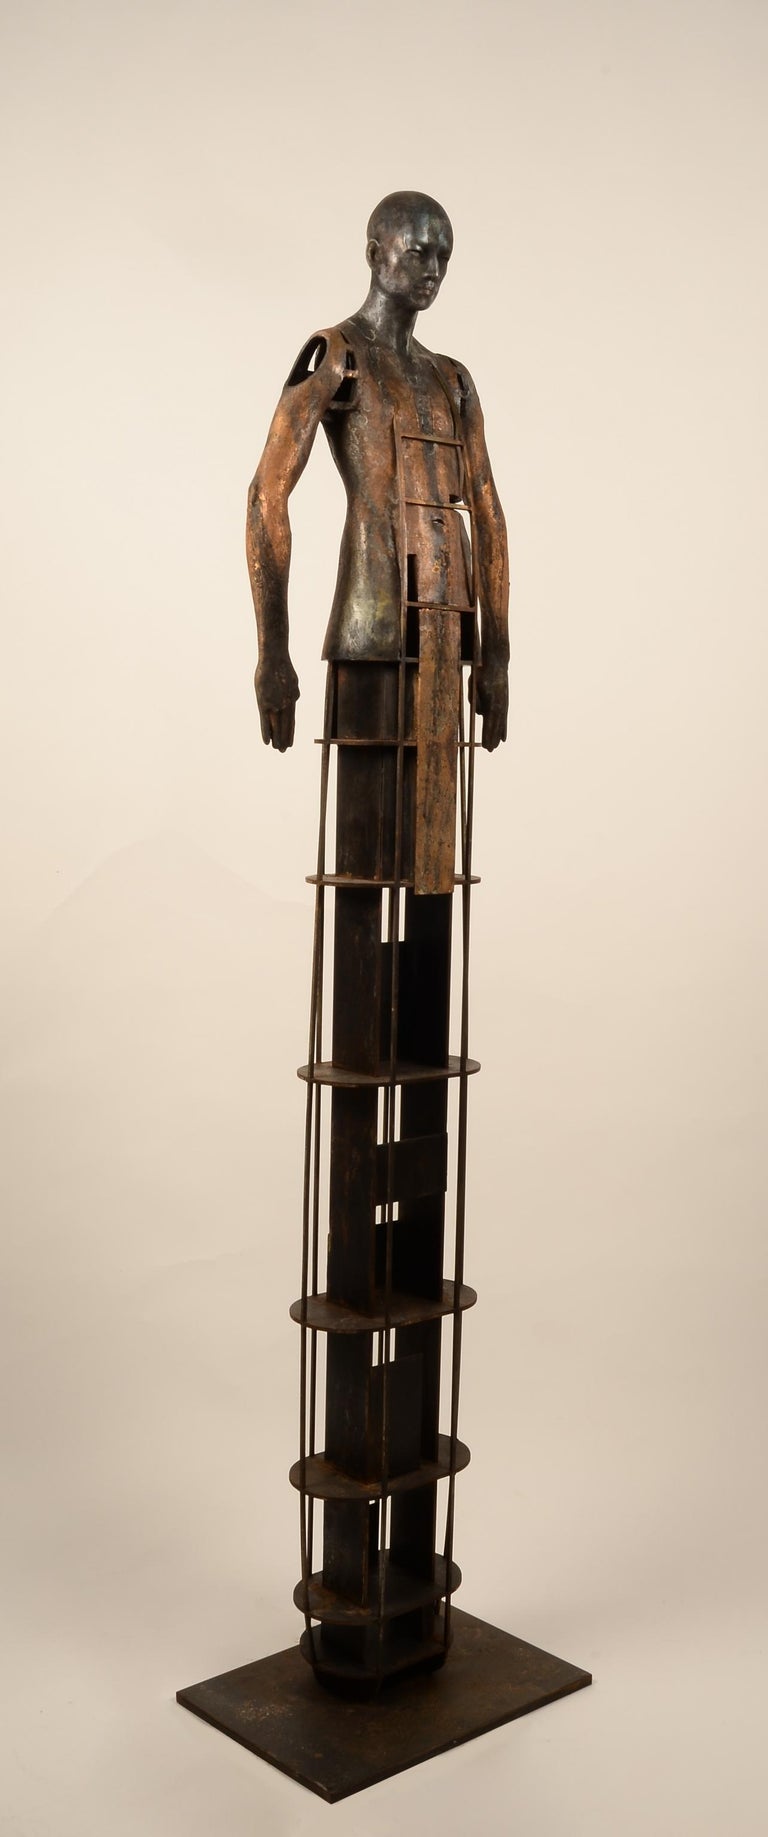 Construction II - Bronze Sculpture Surreal Transfiguring Human Form, Lush Patina For Sale 3